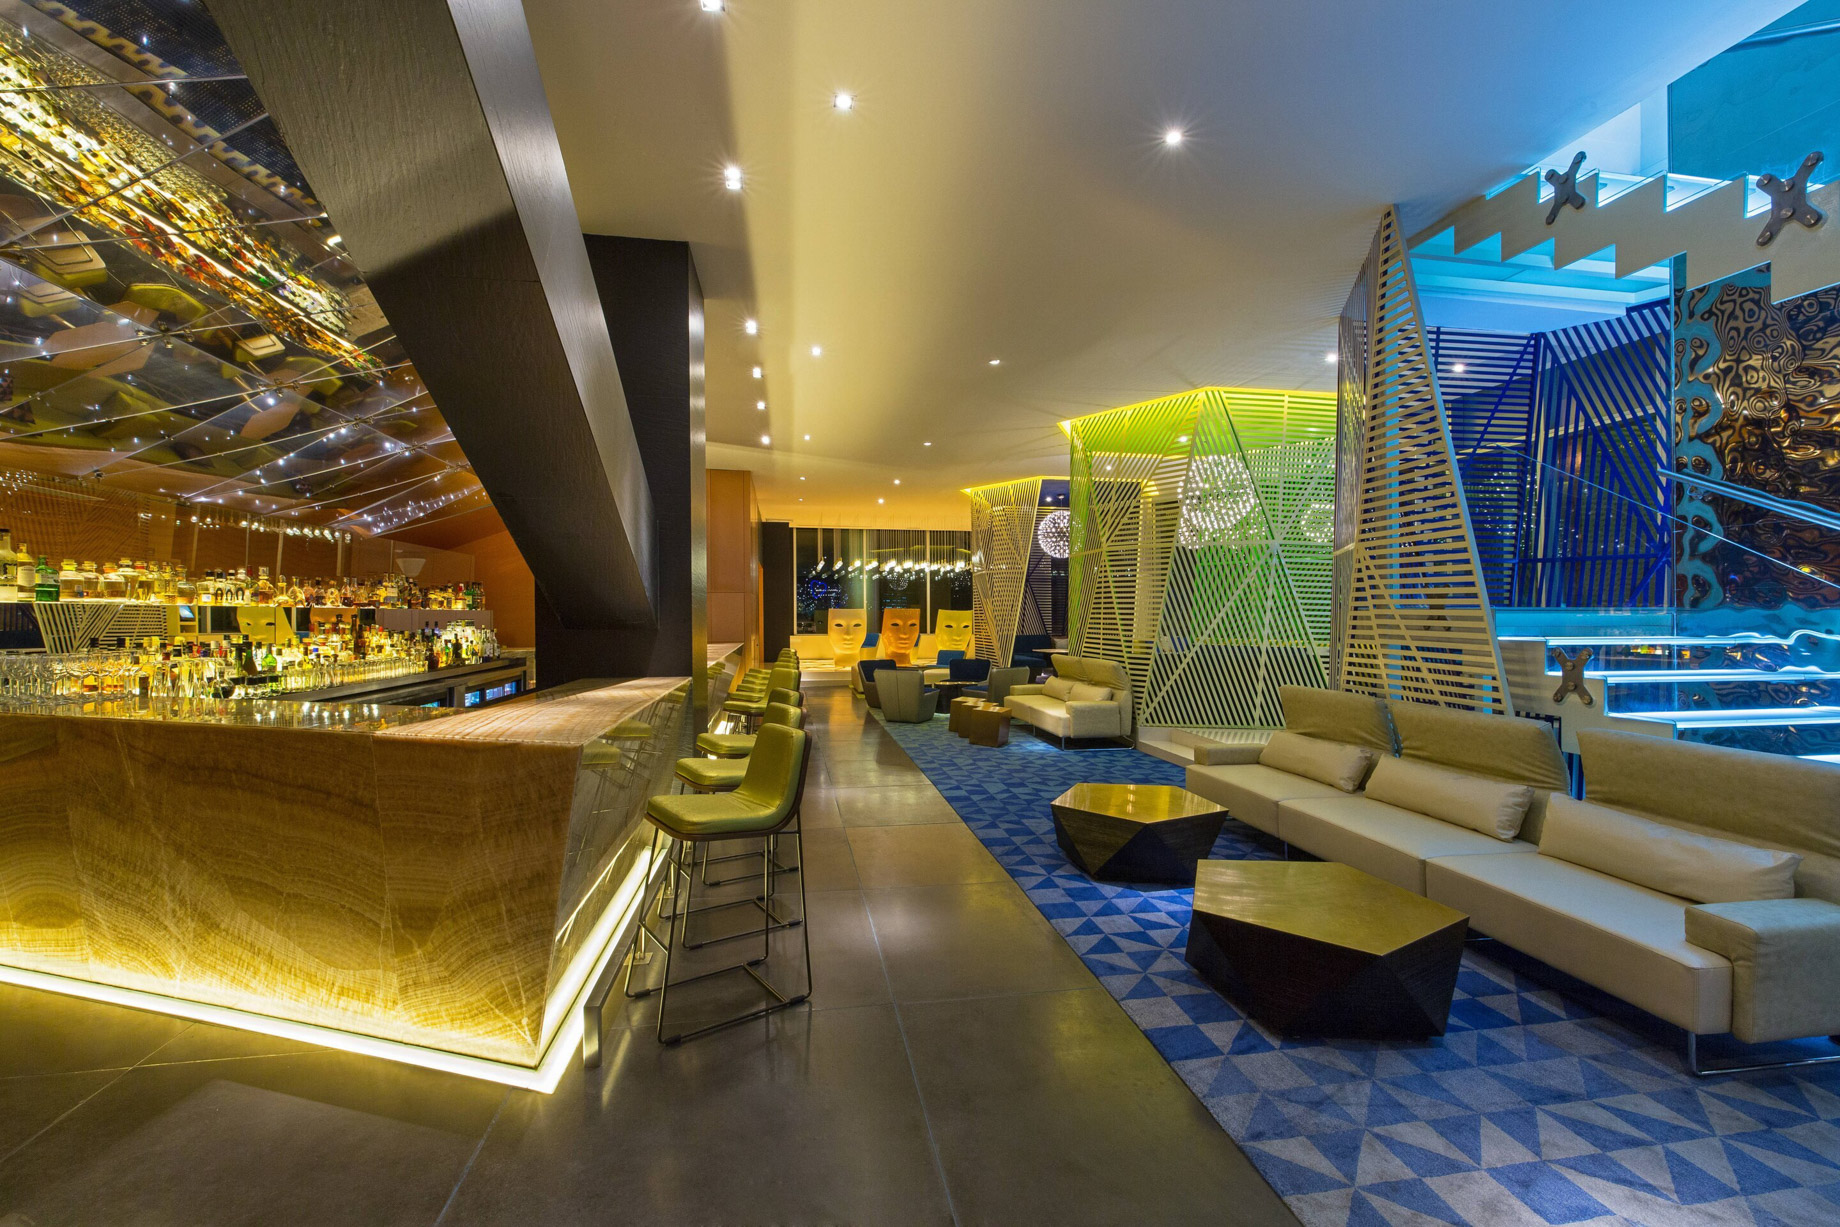 W Mexico City Hotel – Polanco, Mexico City, Mexico – Lobby Living Room Bar Decor